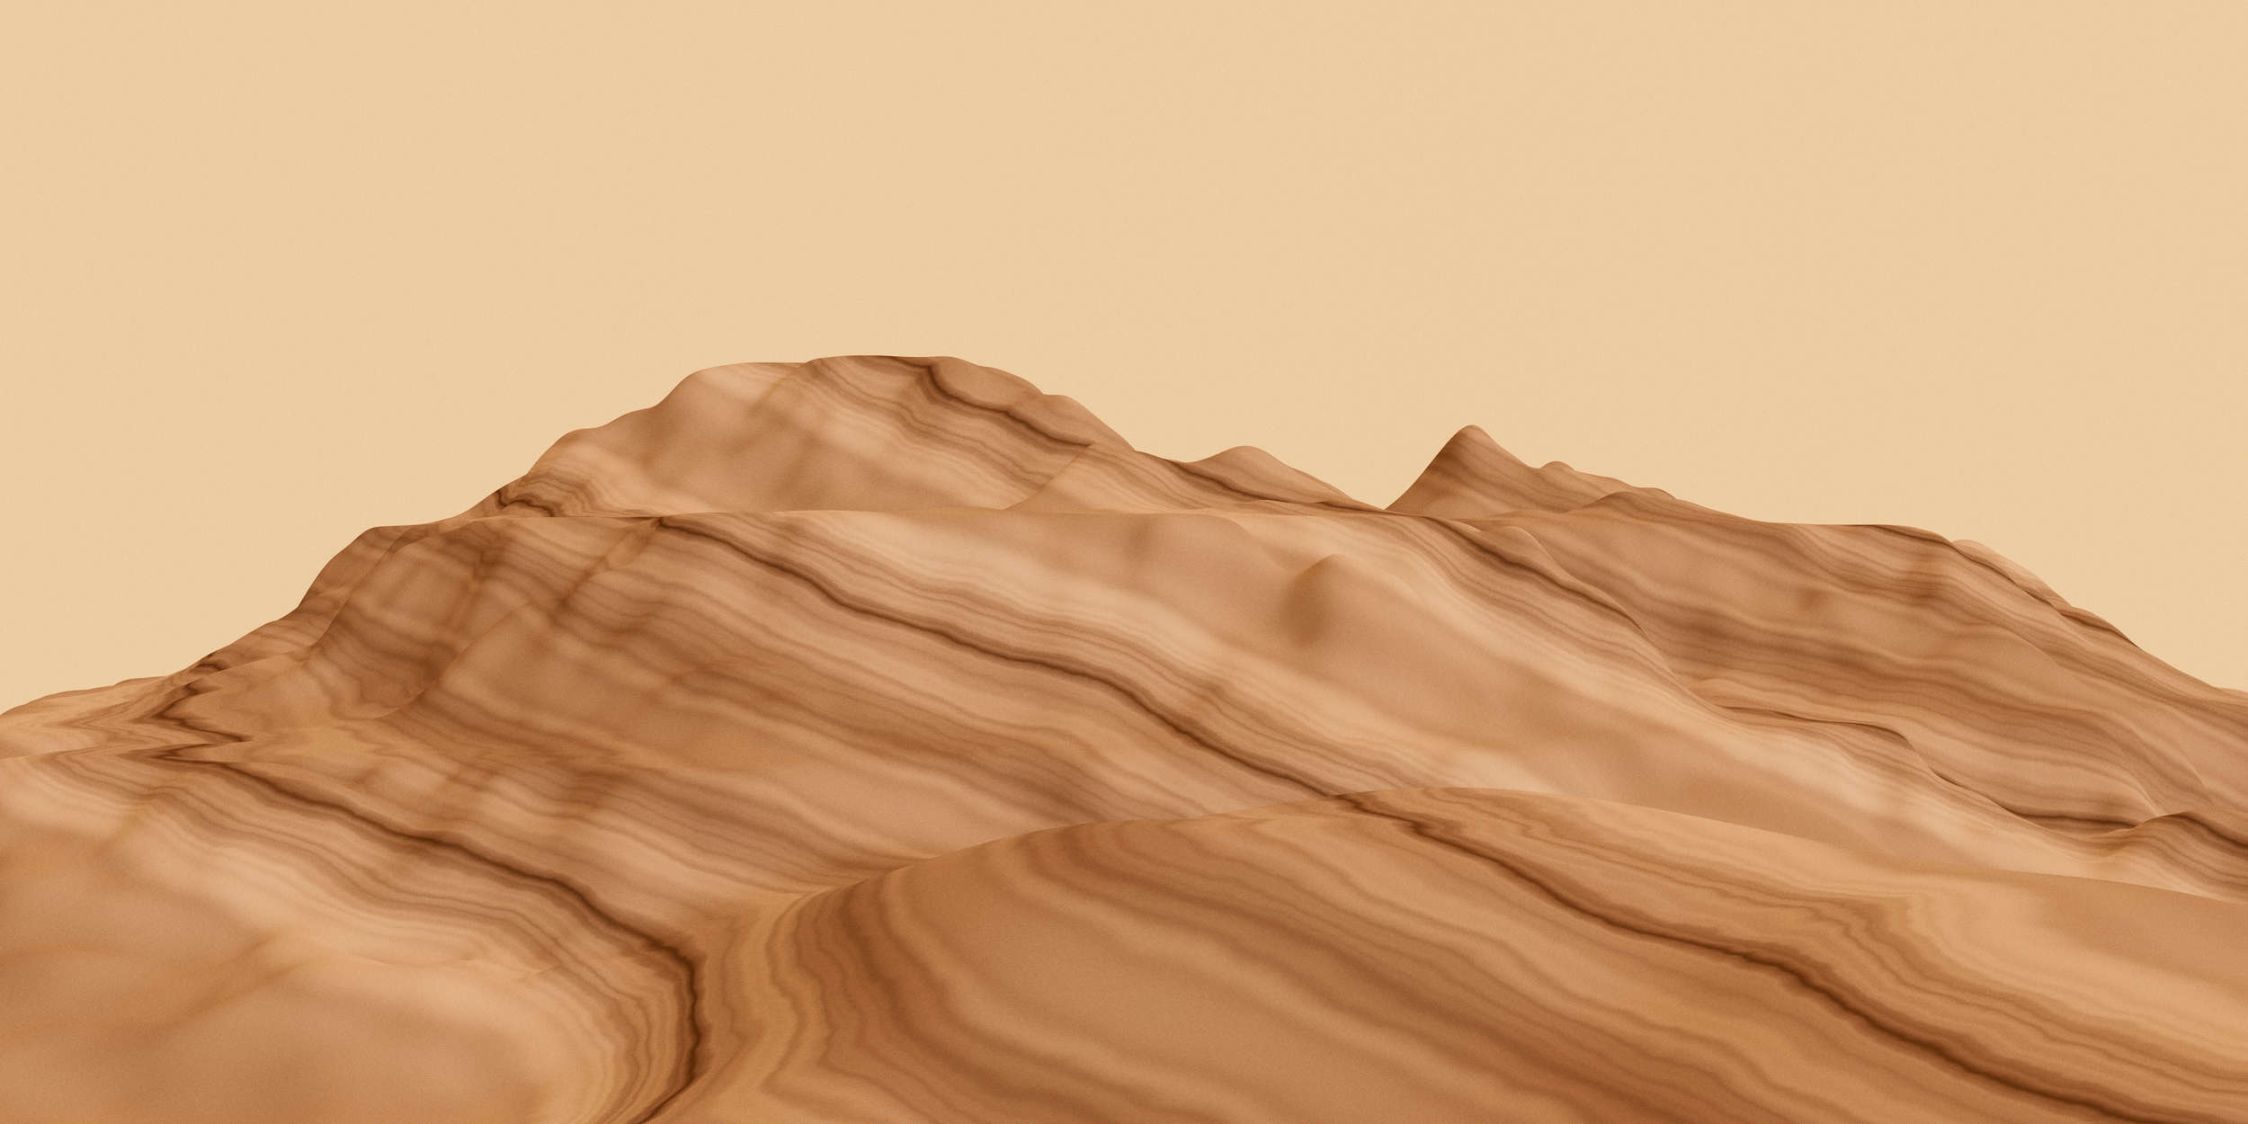             Photo wallpaper »leia« - Abstract mountains - Smooth, slightly shiny premium non-woven fabric
        